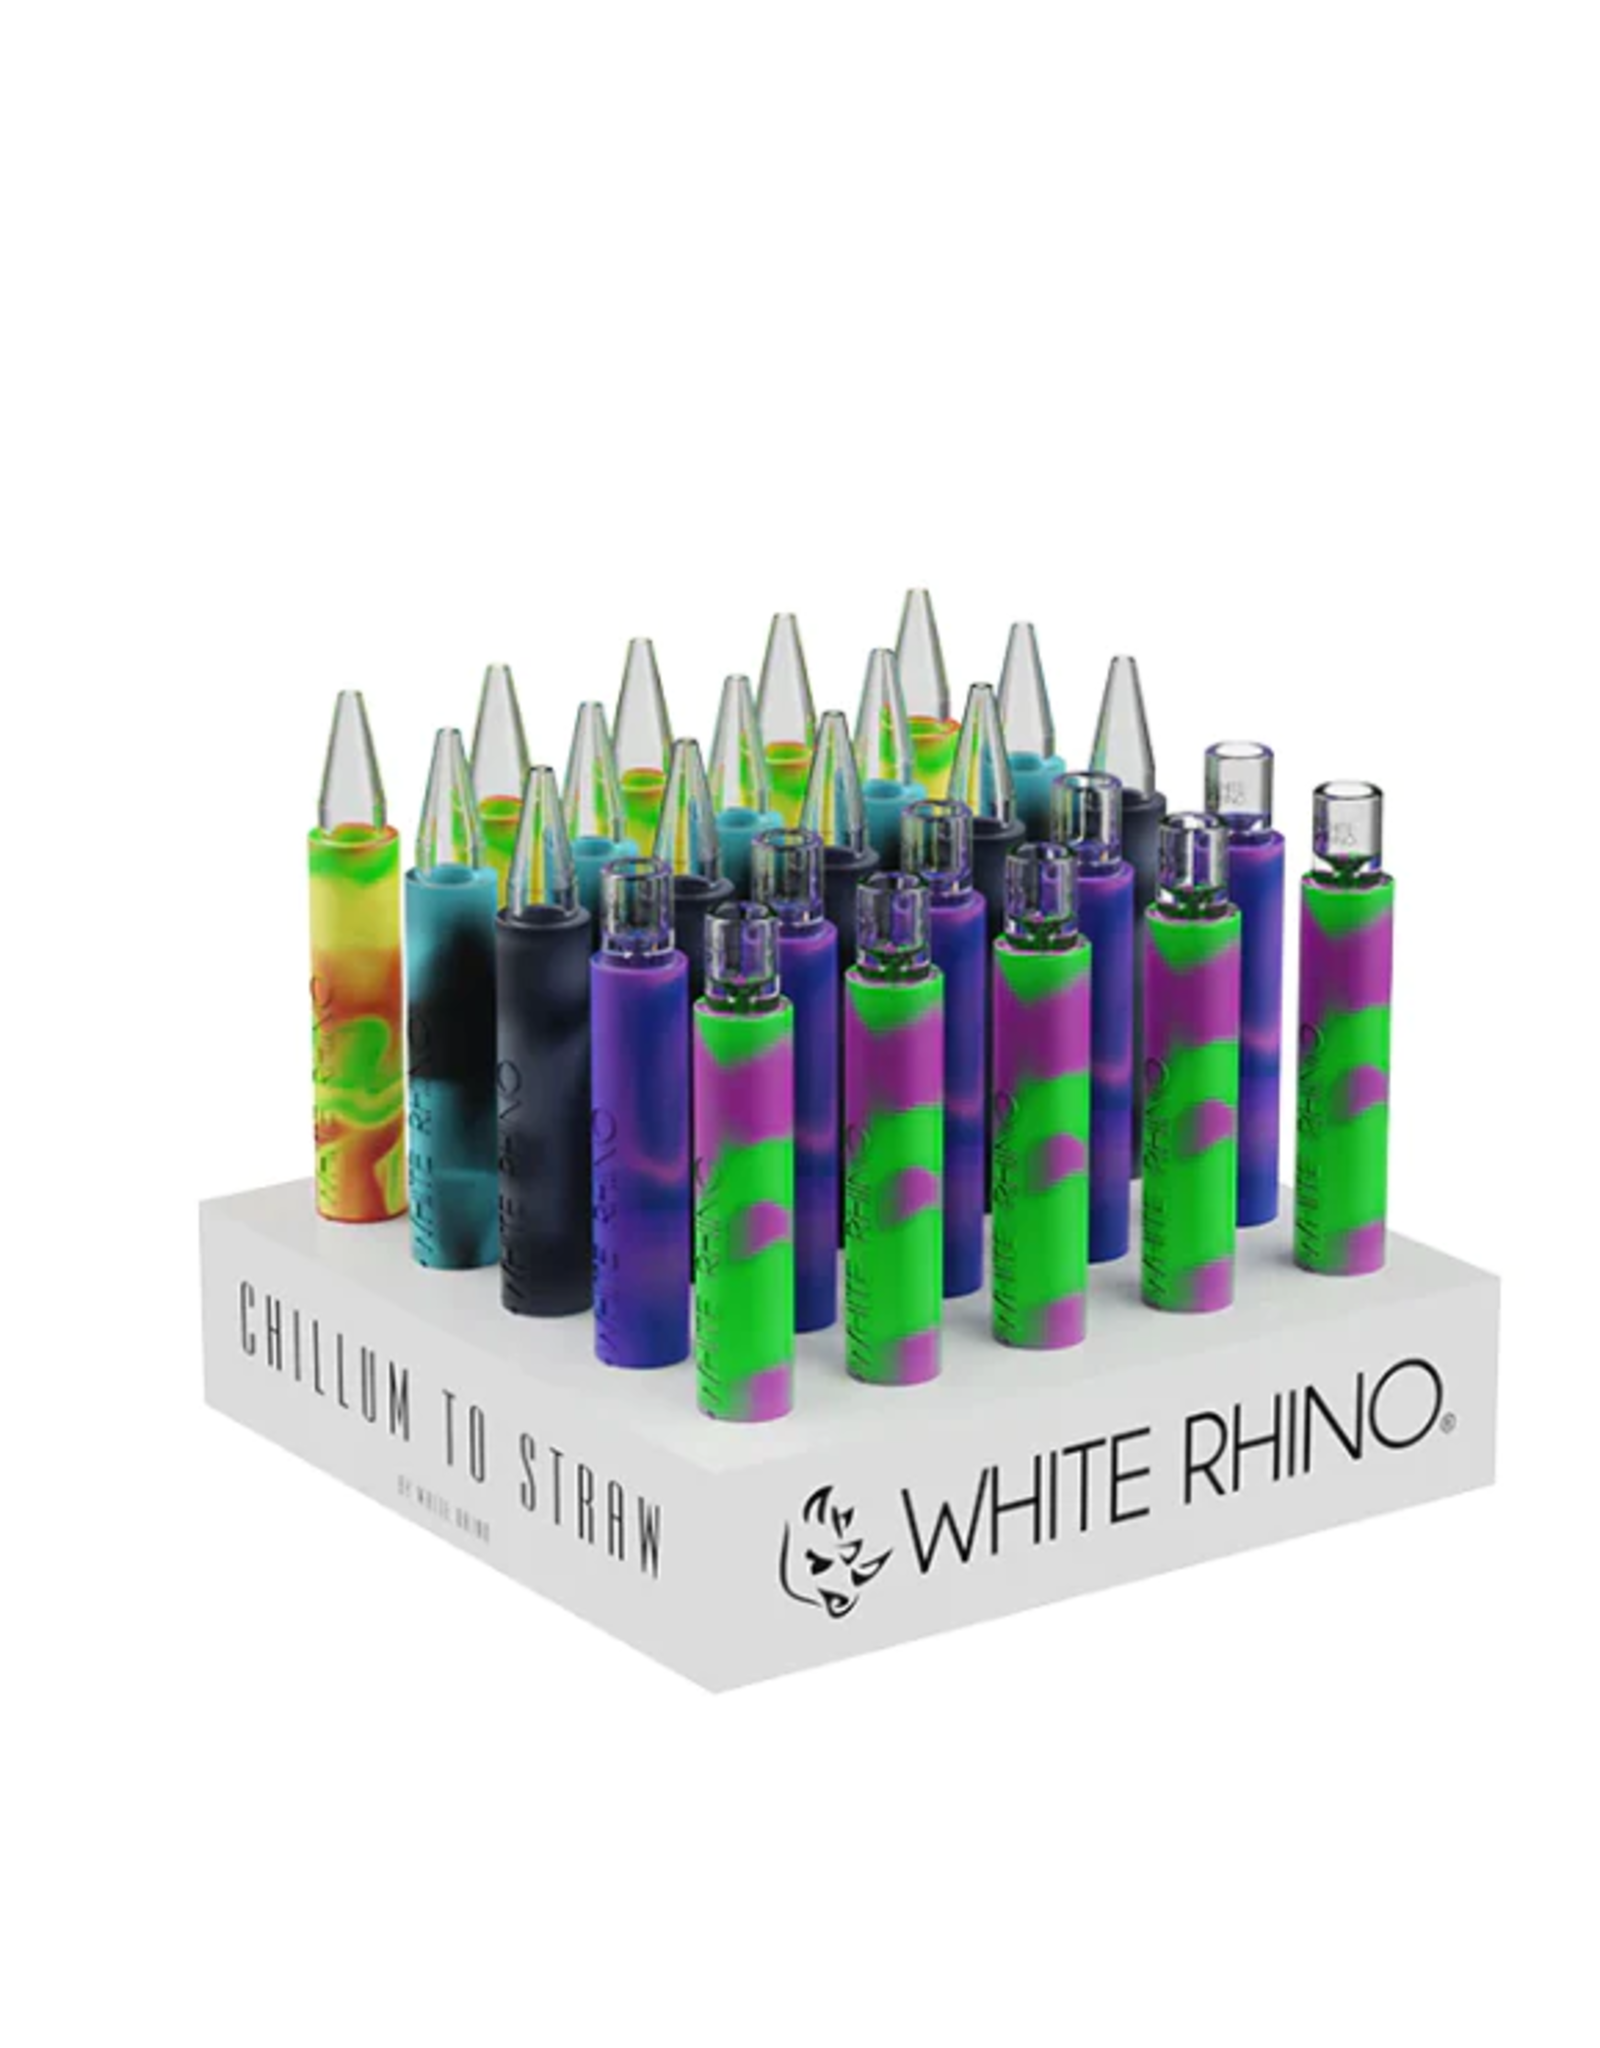 White Rhino White Rhino - Silicon Chillum to Straw "FLIP" 25ct box